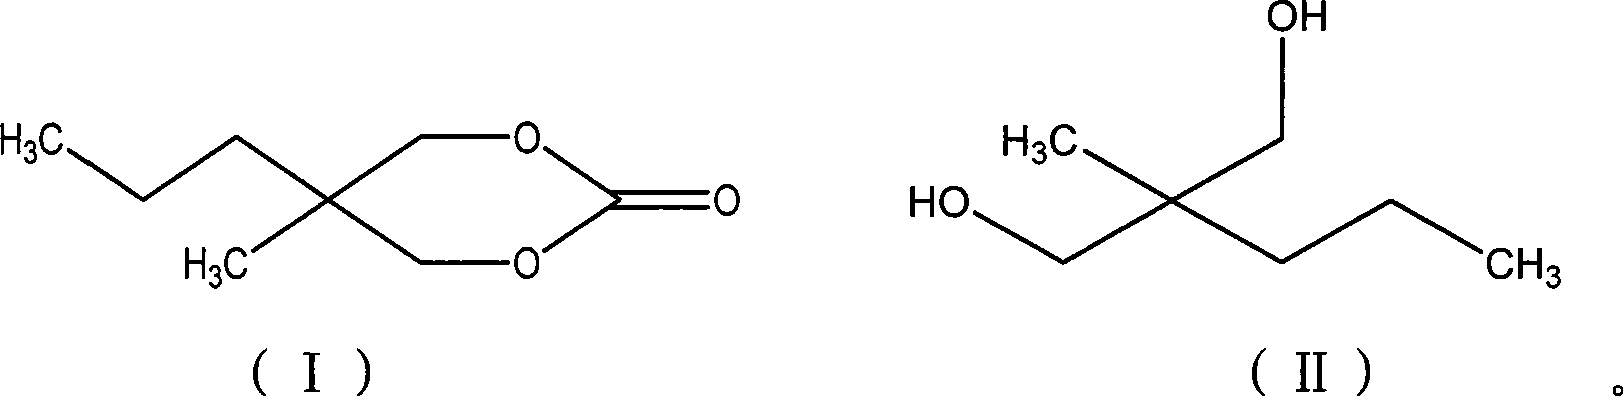 Method for synthesizing 2-methyl-2-propyl-1,3-propanediol dimethyl carbonate compound